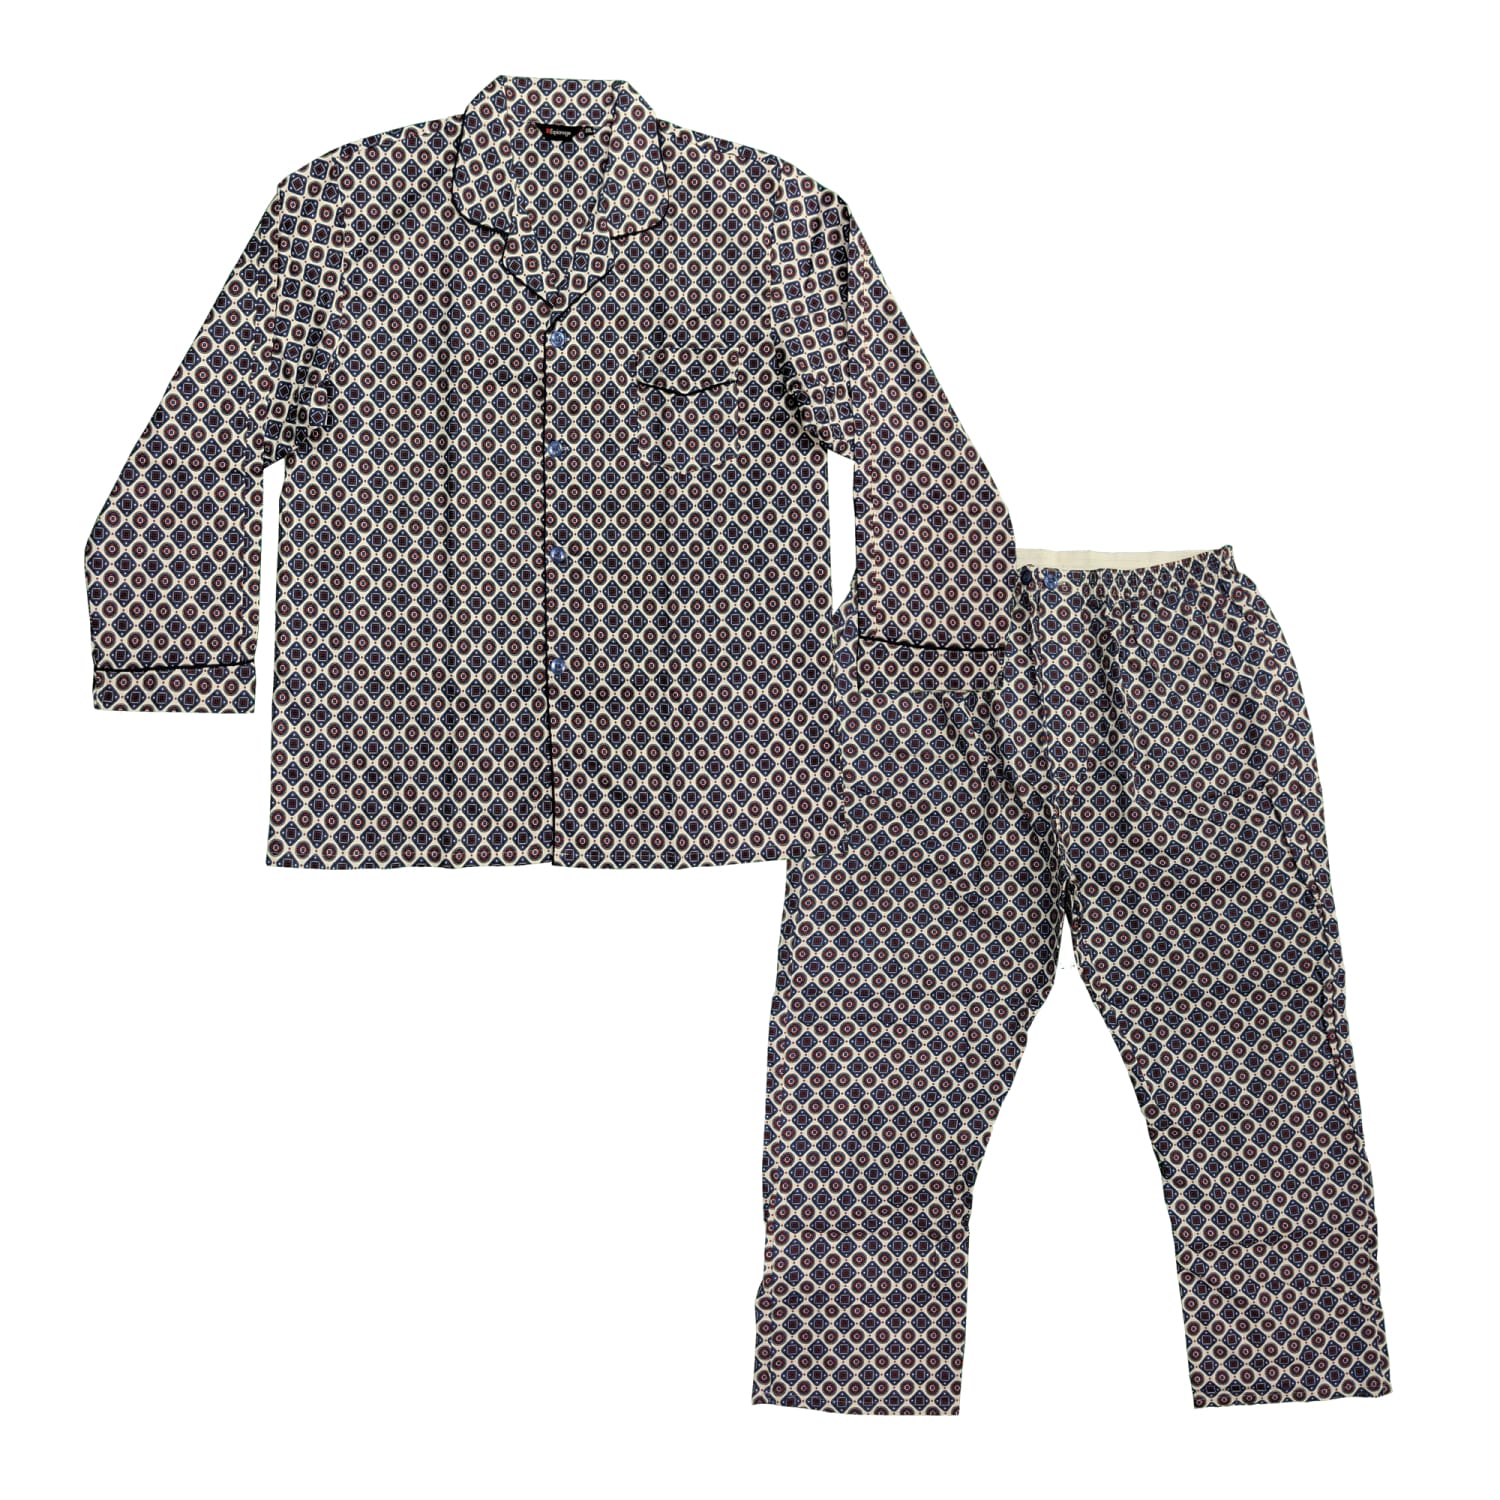 Espionage Brushed Cotton PJs (Shirt & Trousers) - PJ055 - White / Blue / Red 1